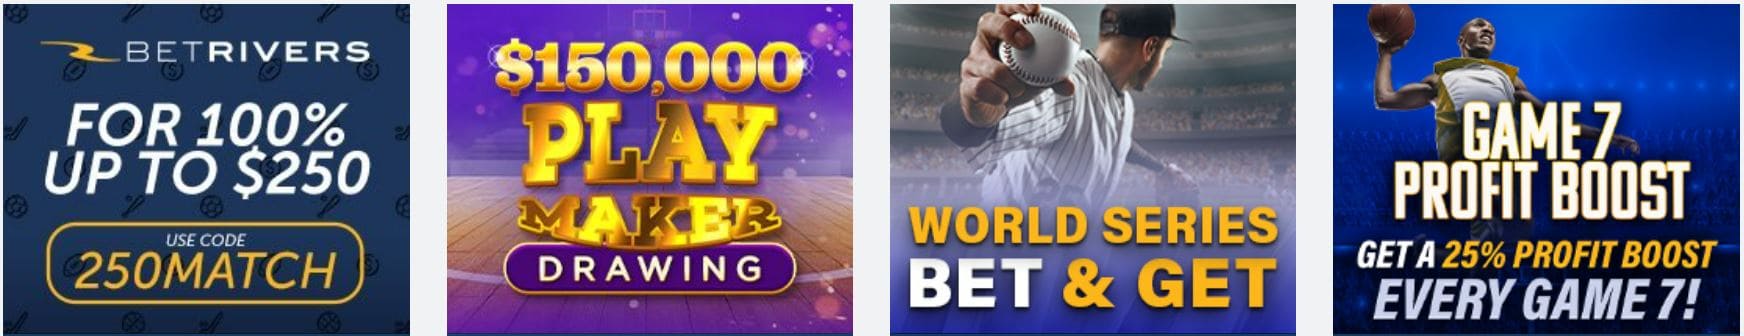 BetRivers Casino Promotion